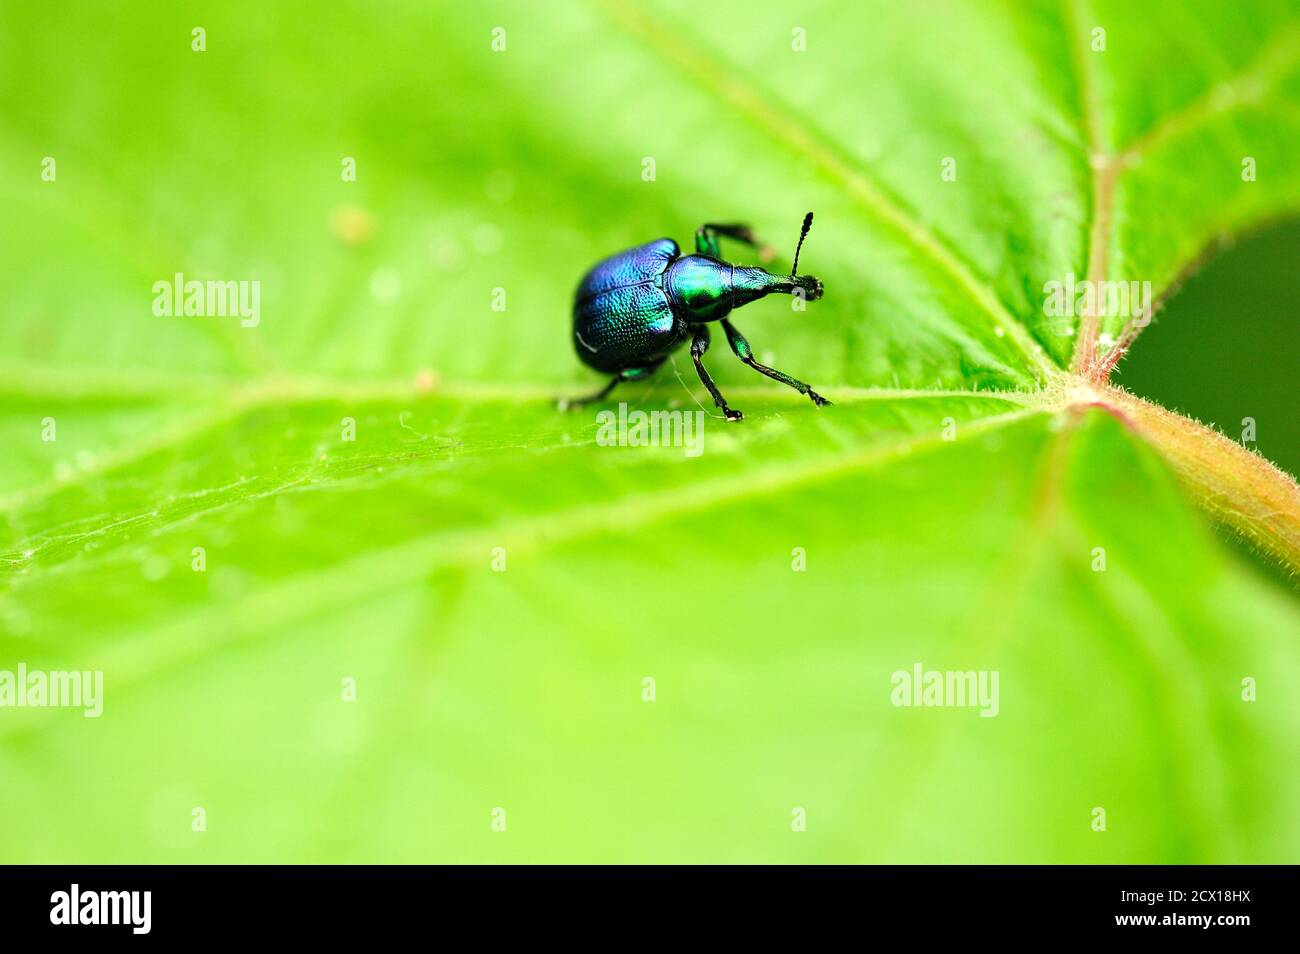 Aspen sucker, Byctiscus populi, Attelabidae, bug, on leaf, insect, animal, Hansjag, Hungary Stock Photo